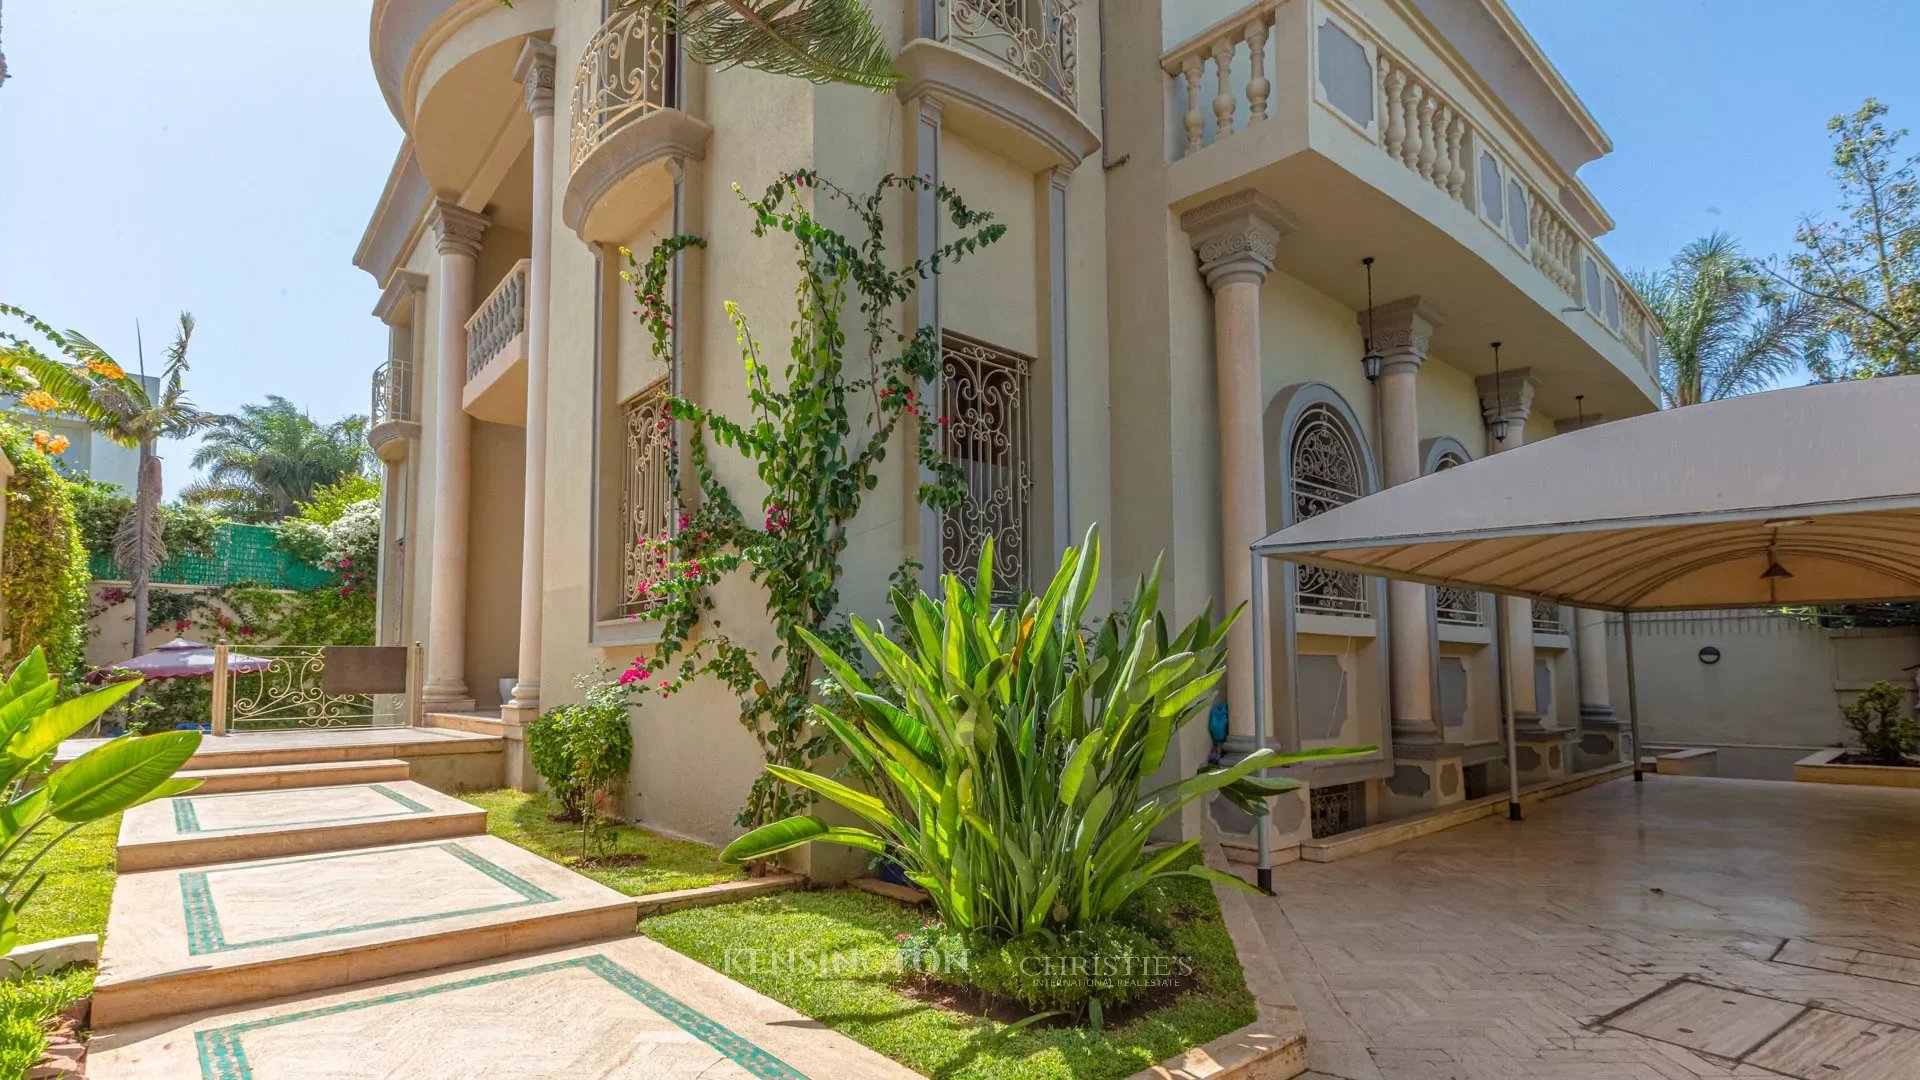 Prosperous Villa in Casablanca, Morocco